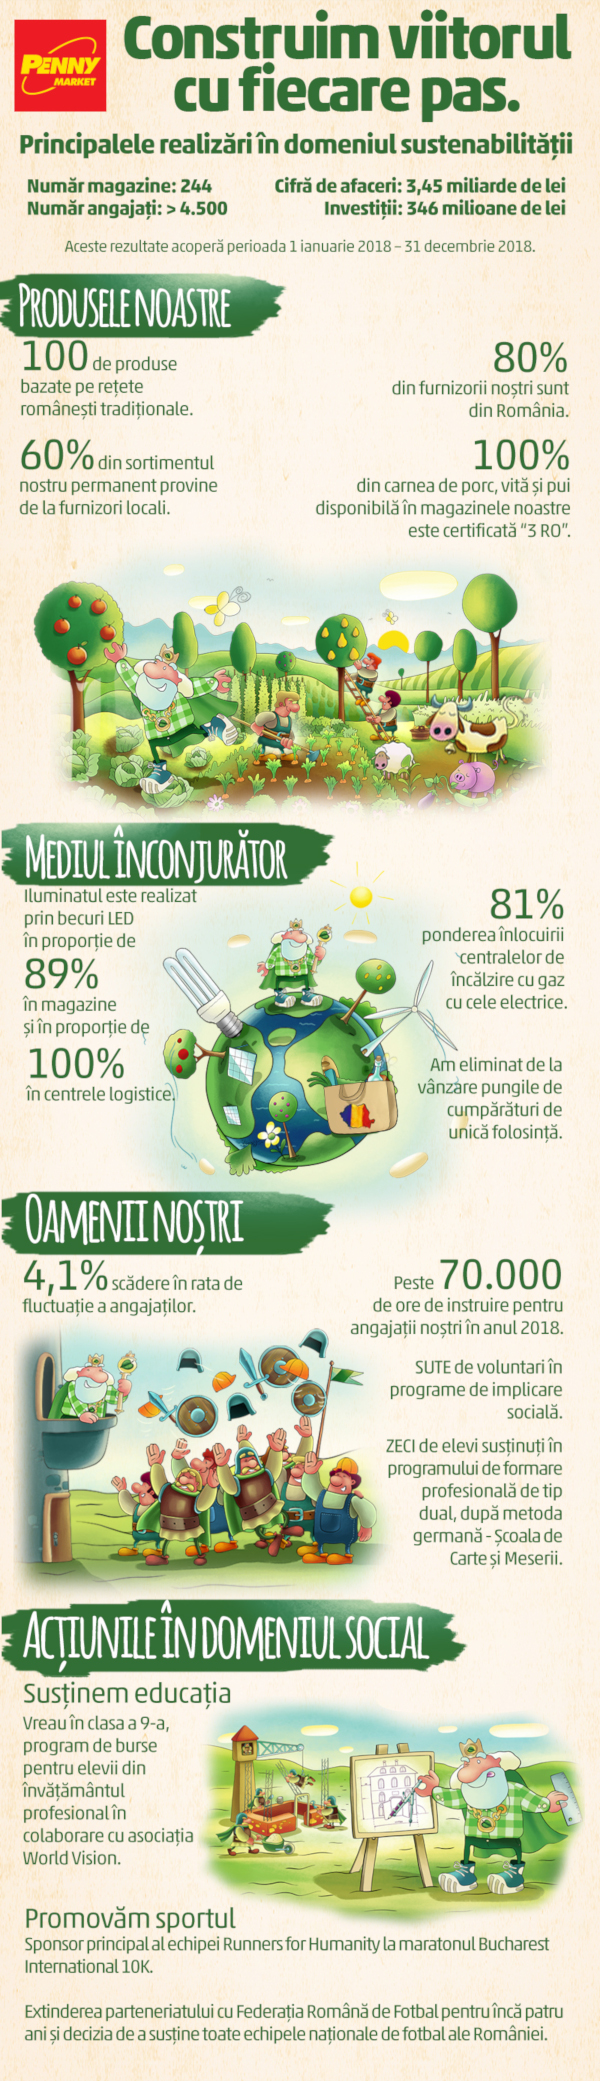 Sustainability Infographic PENNY Market